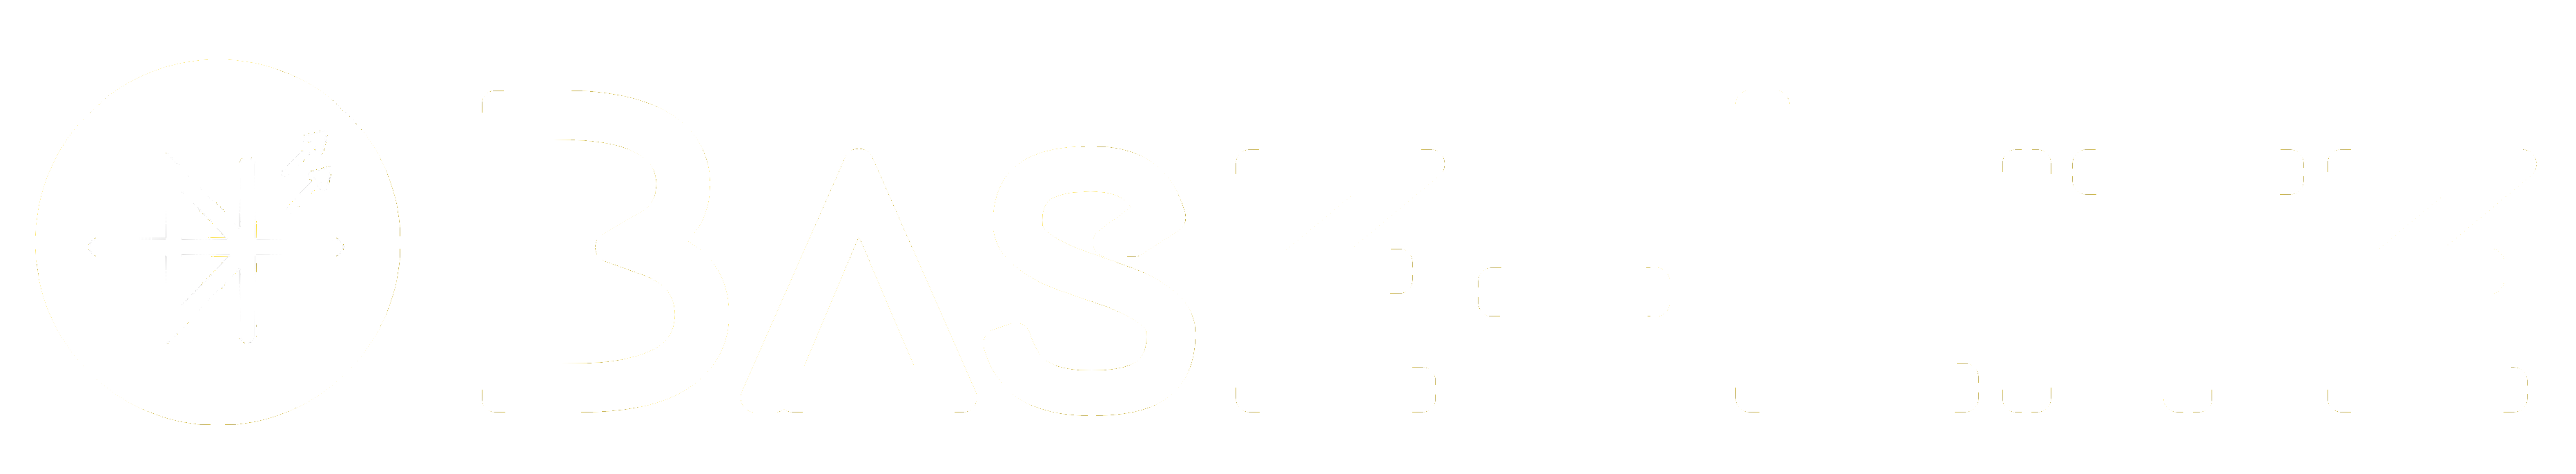 Base Lite Kft Logo